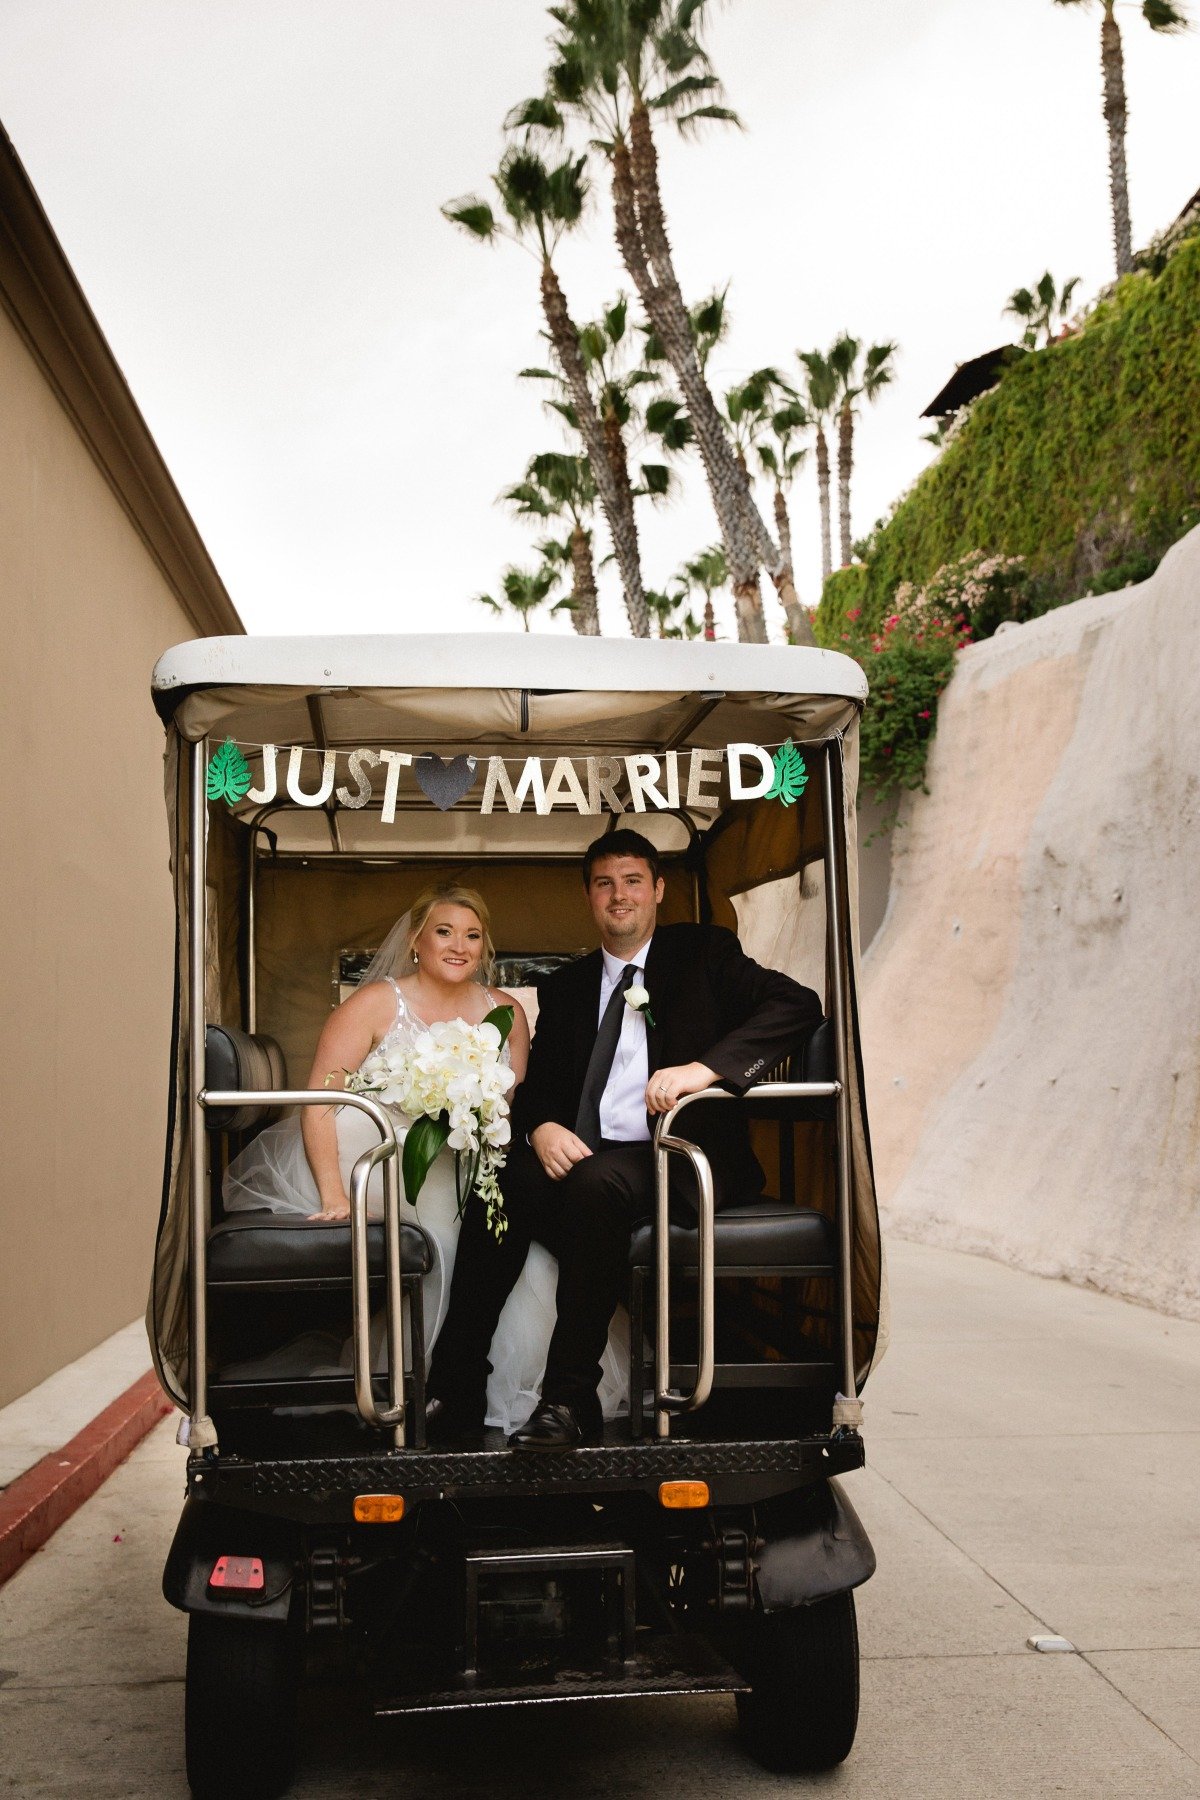 Just married golf cart